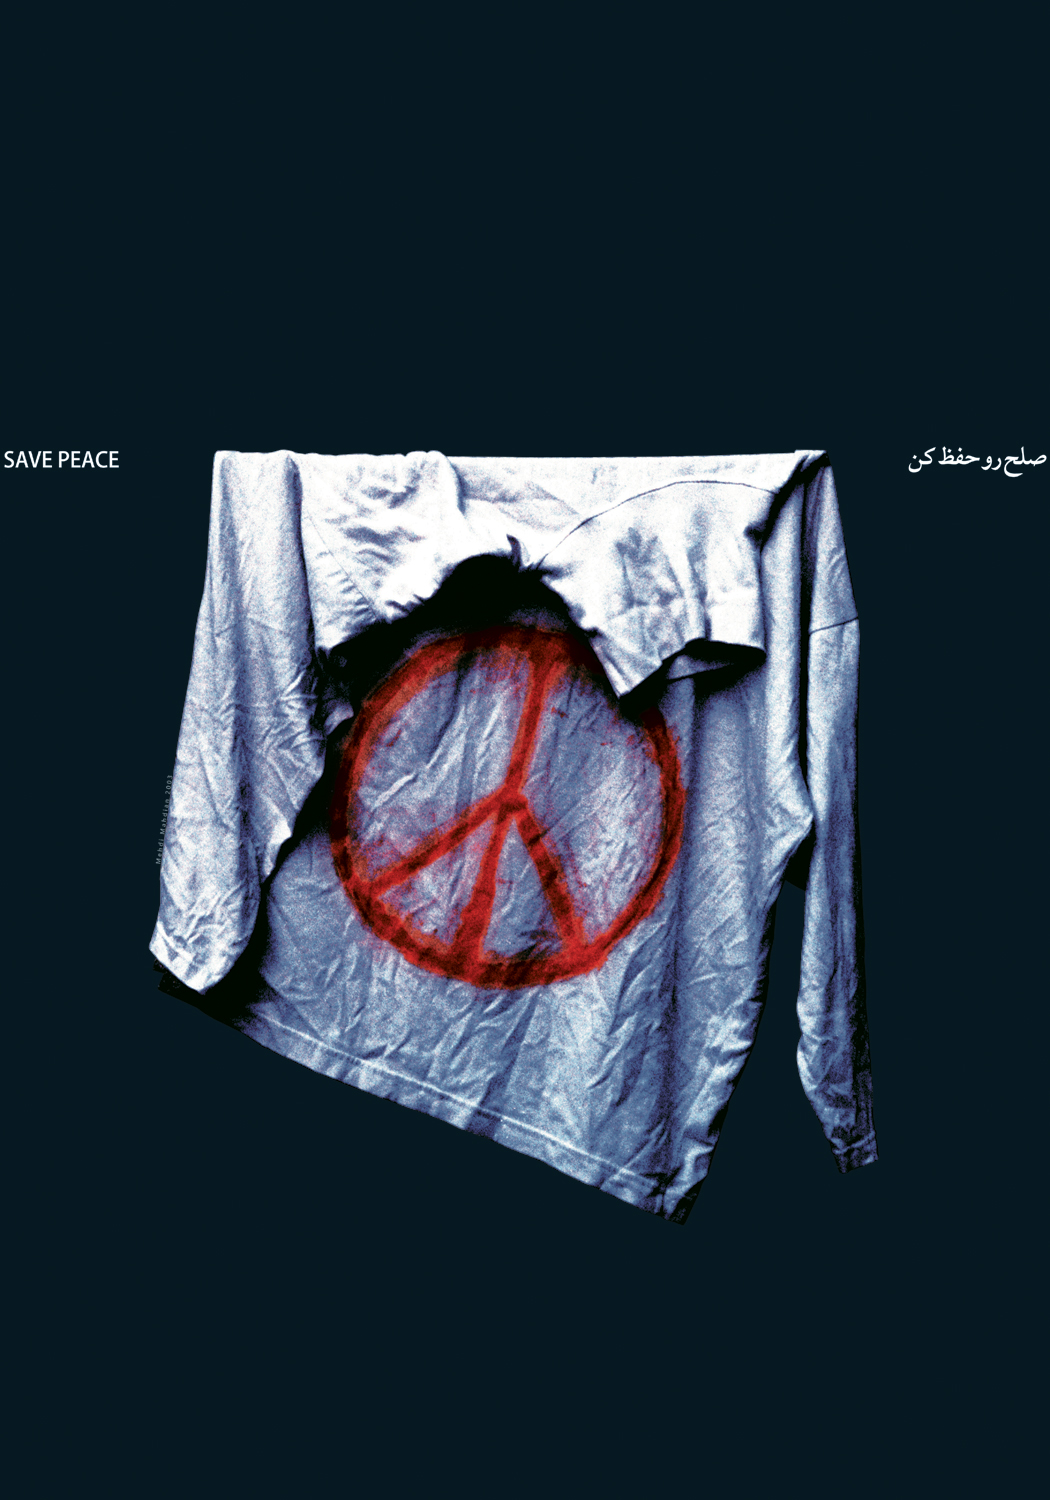 Mehdi-Mahdian-Save-Peace-2003